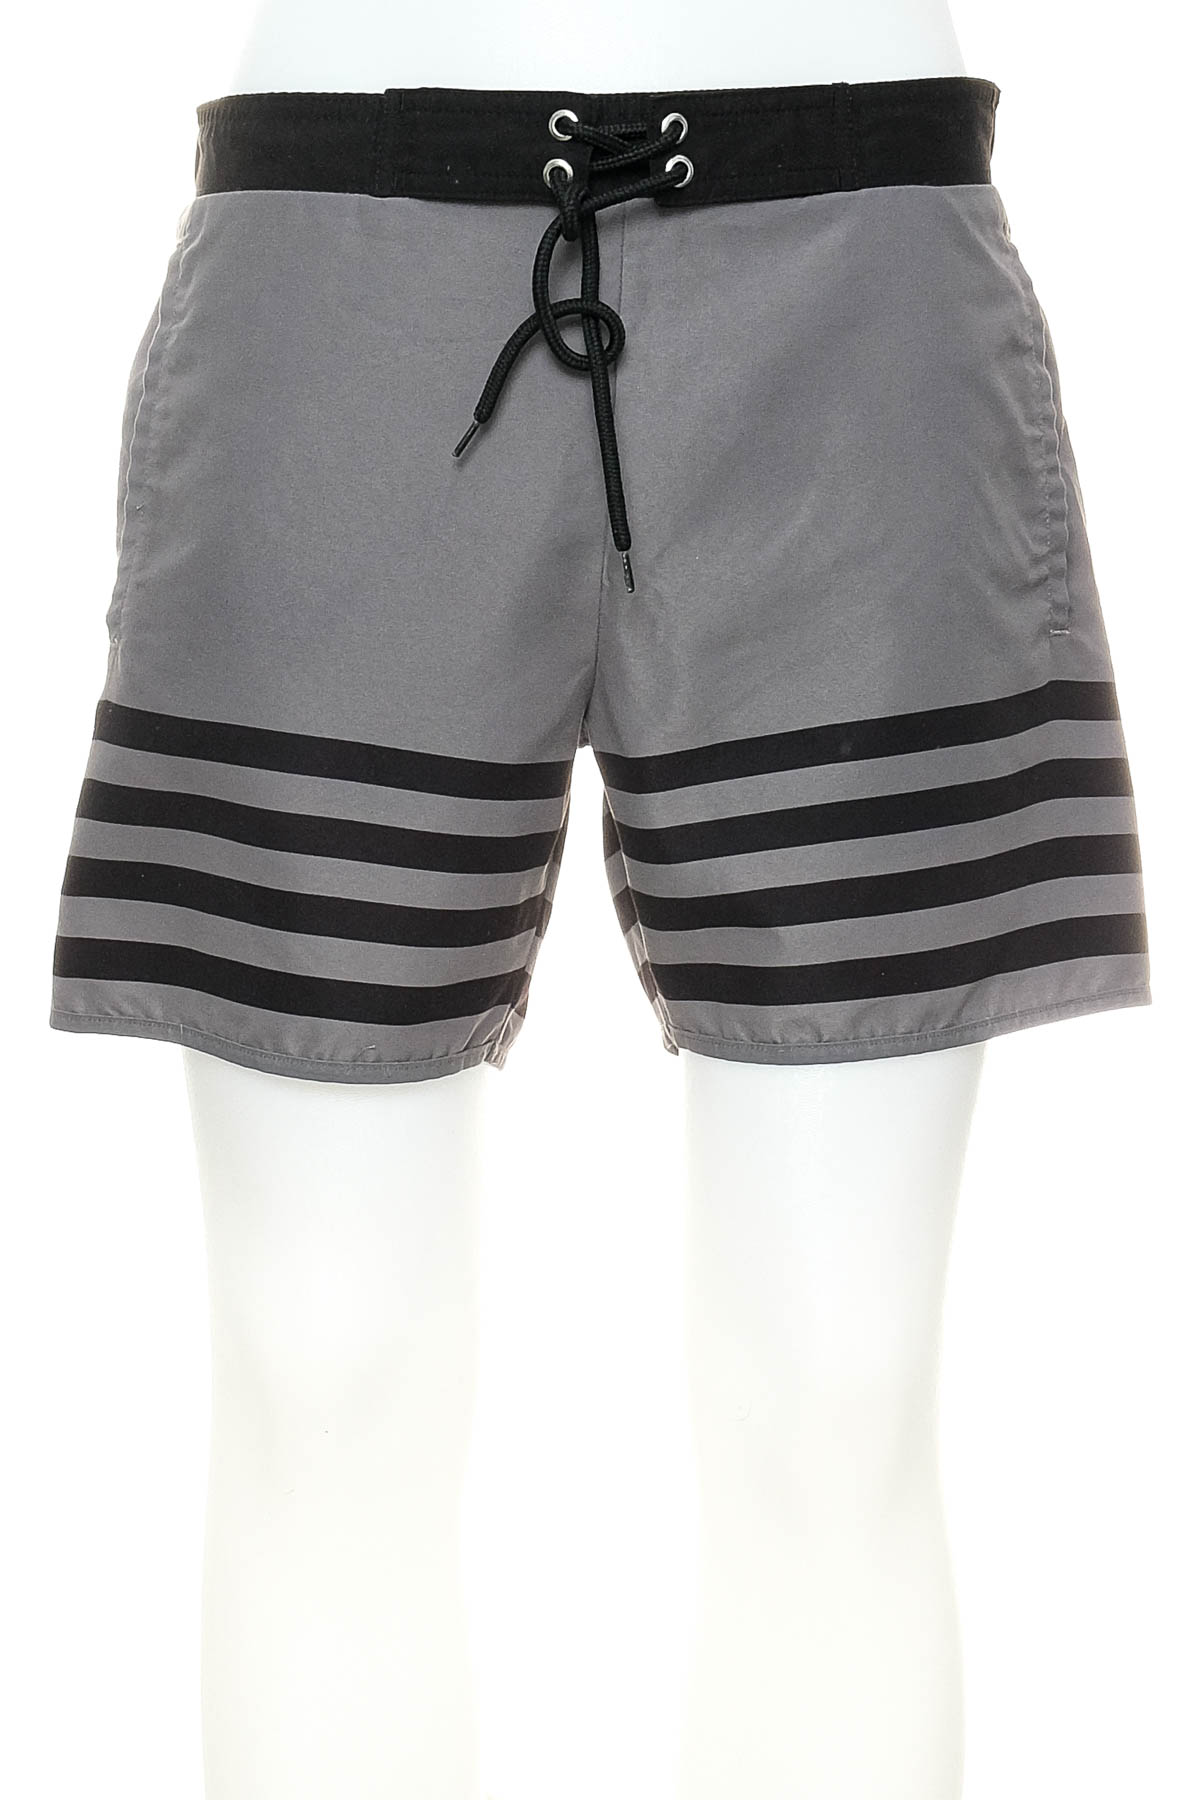 Men's shorts - Pier One - 0